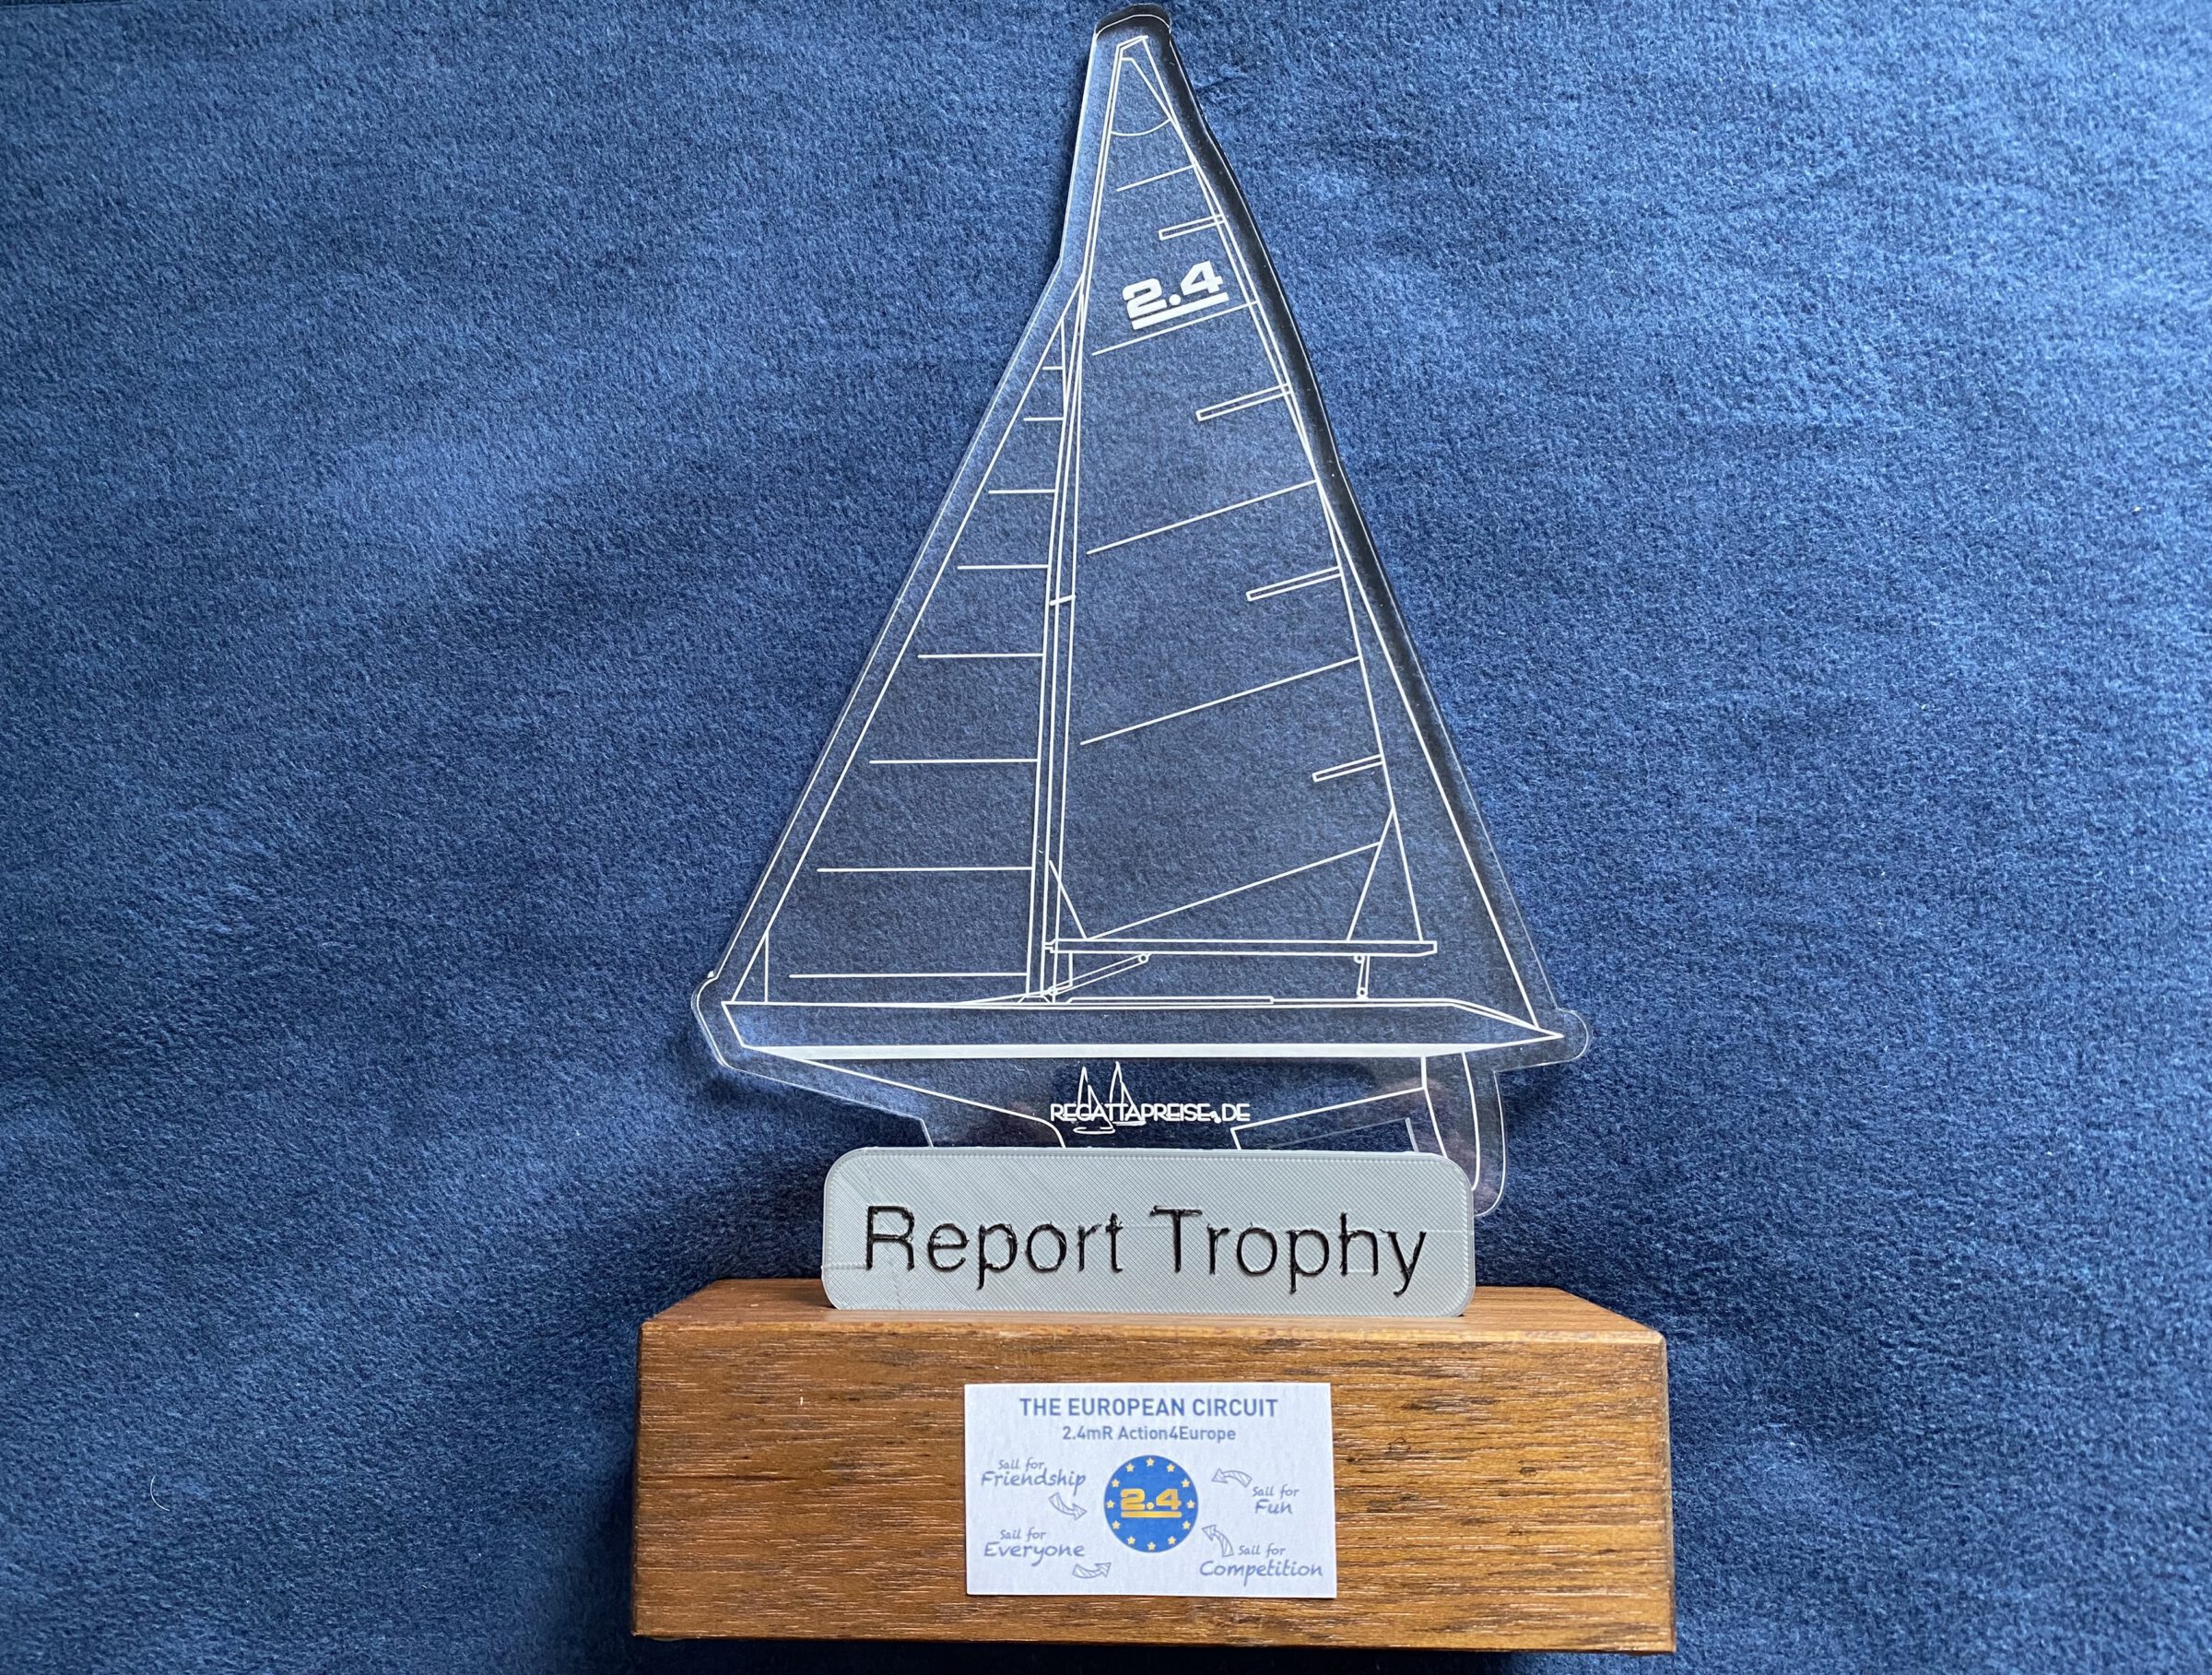 Report Trophy ag an European Circuit